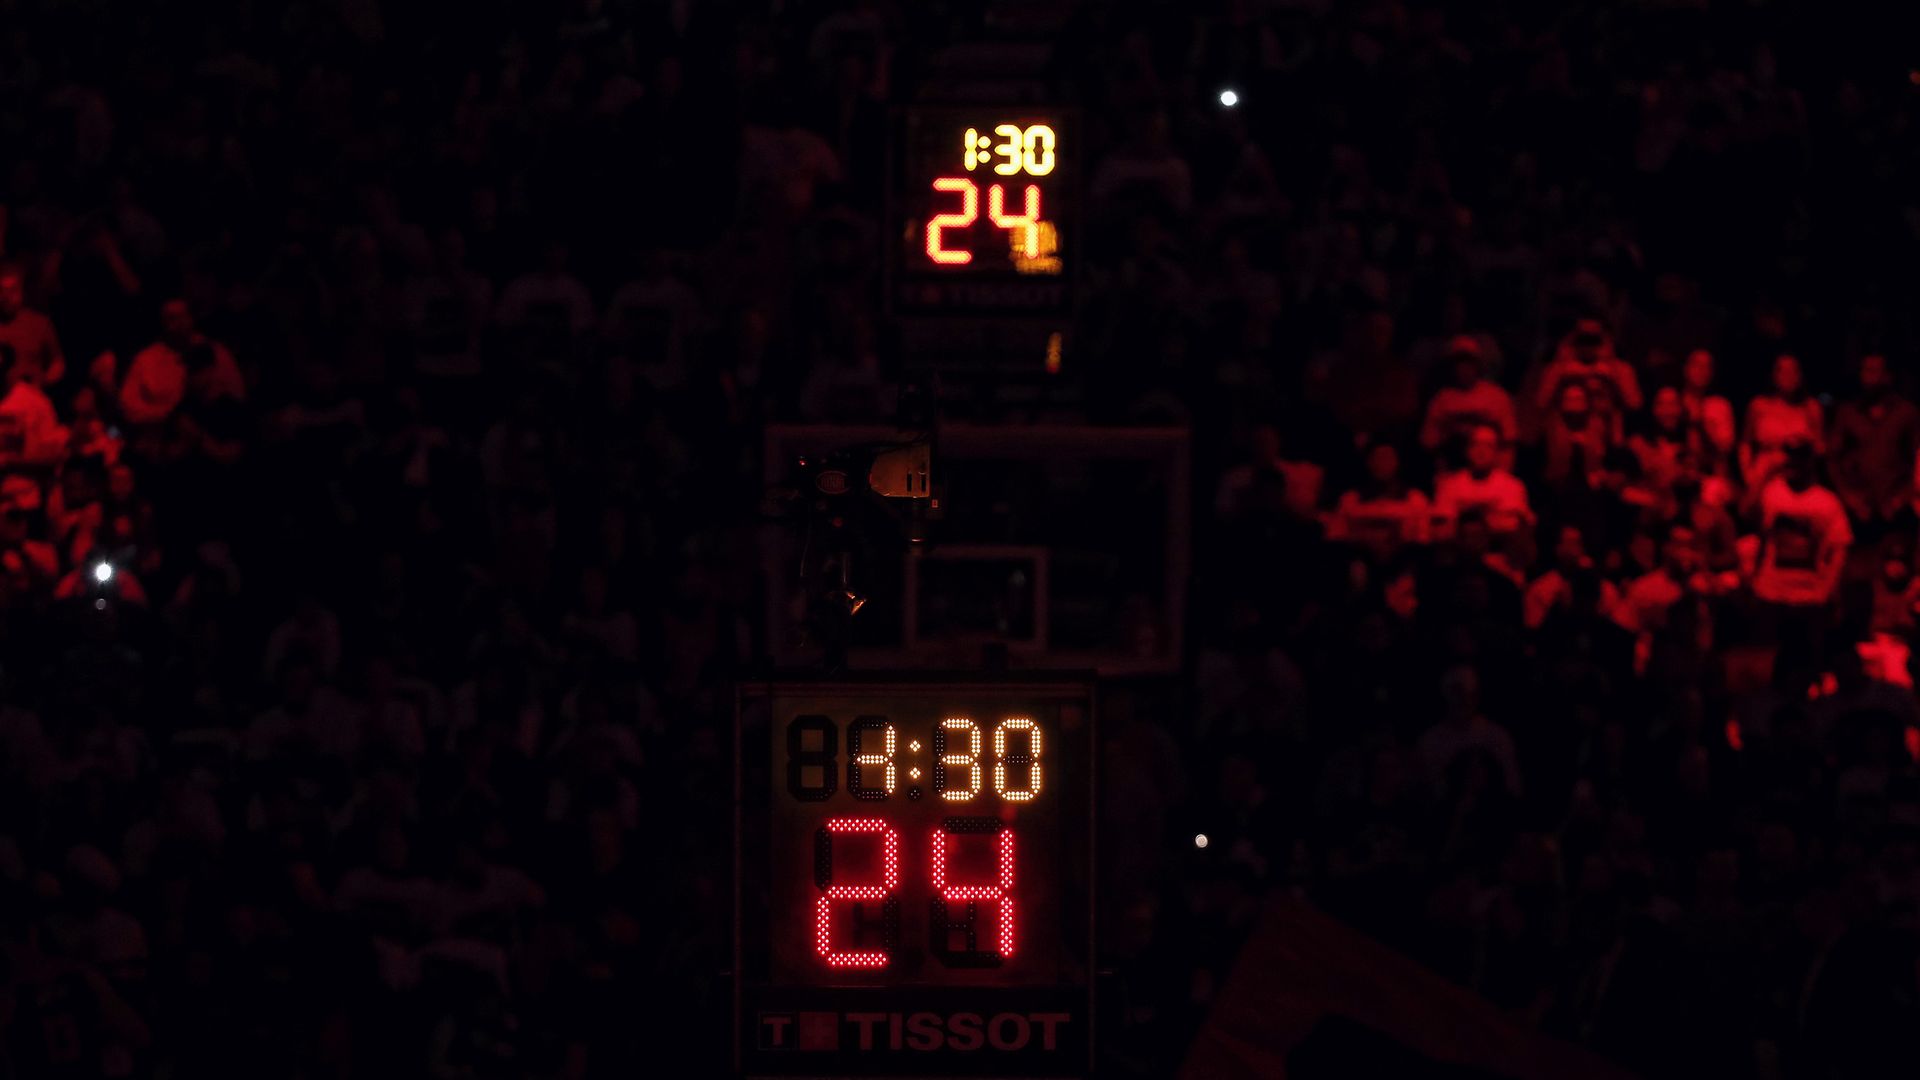 The shot clock